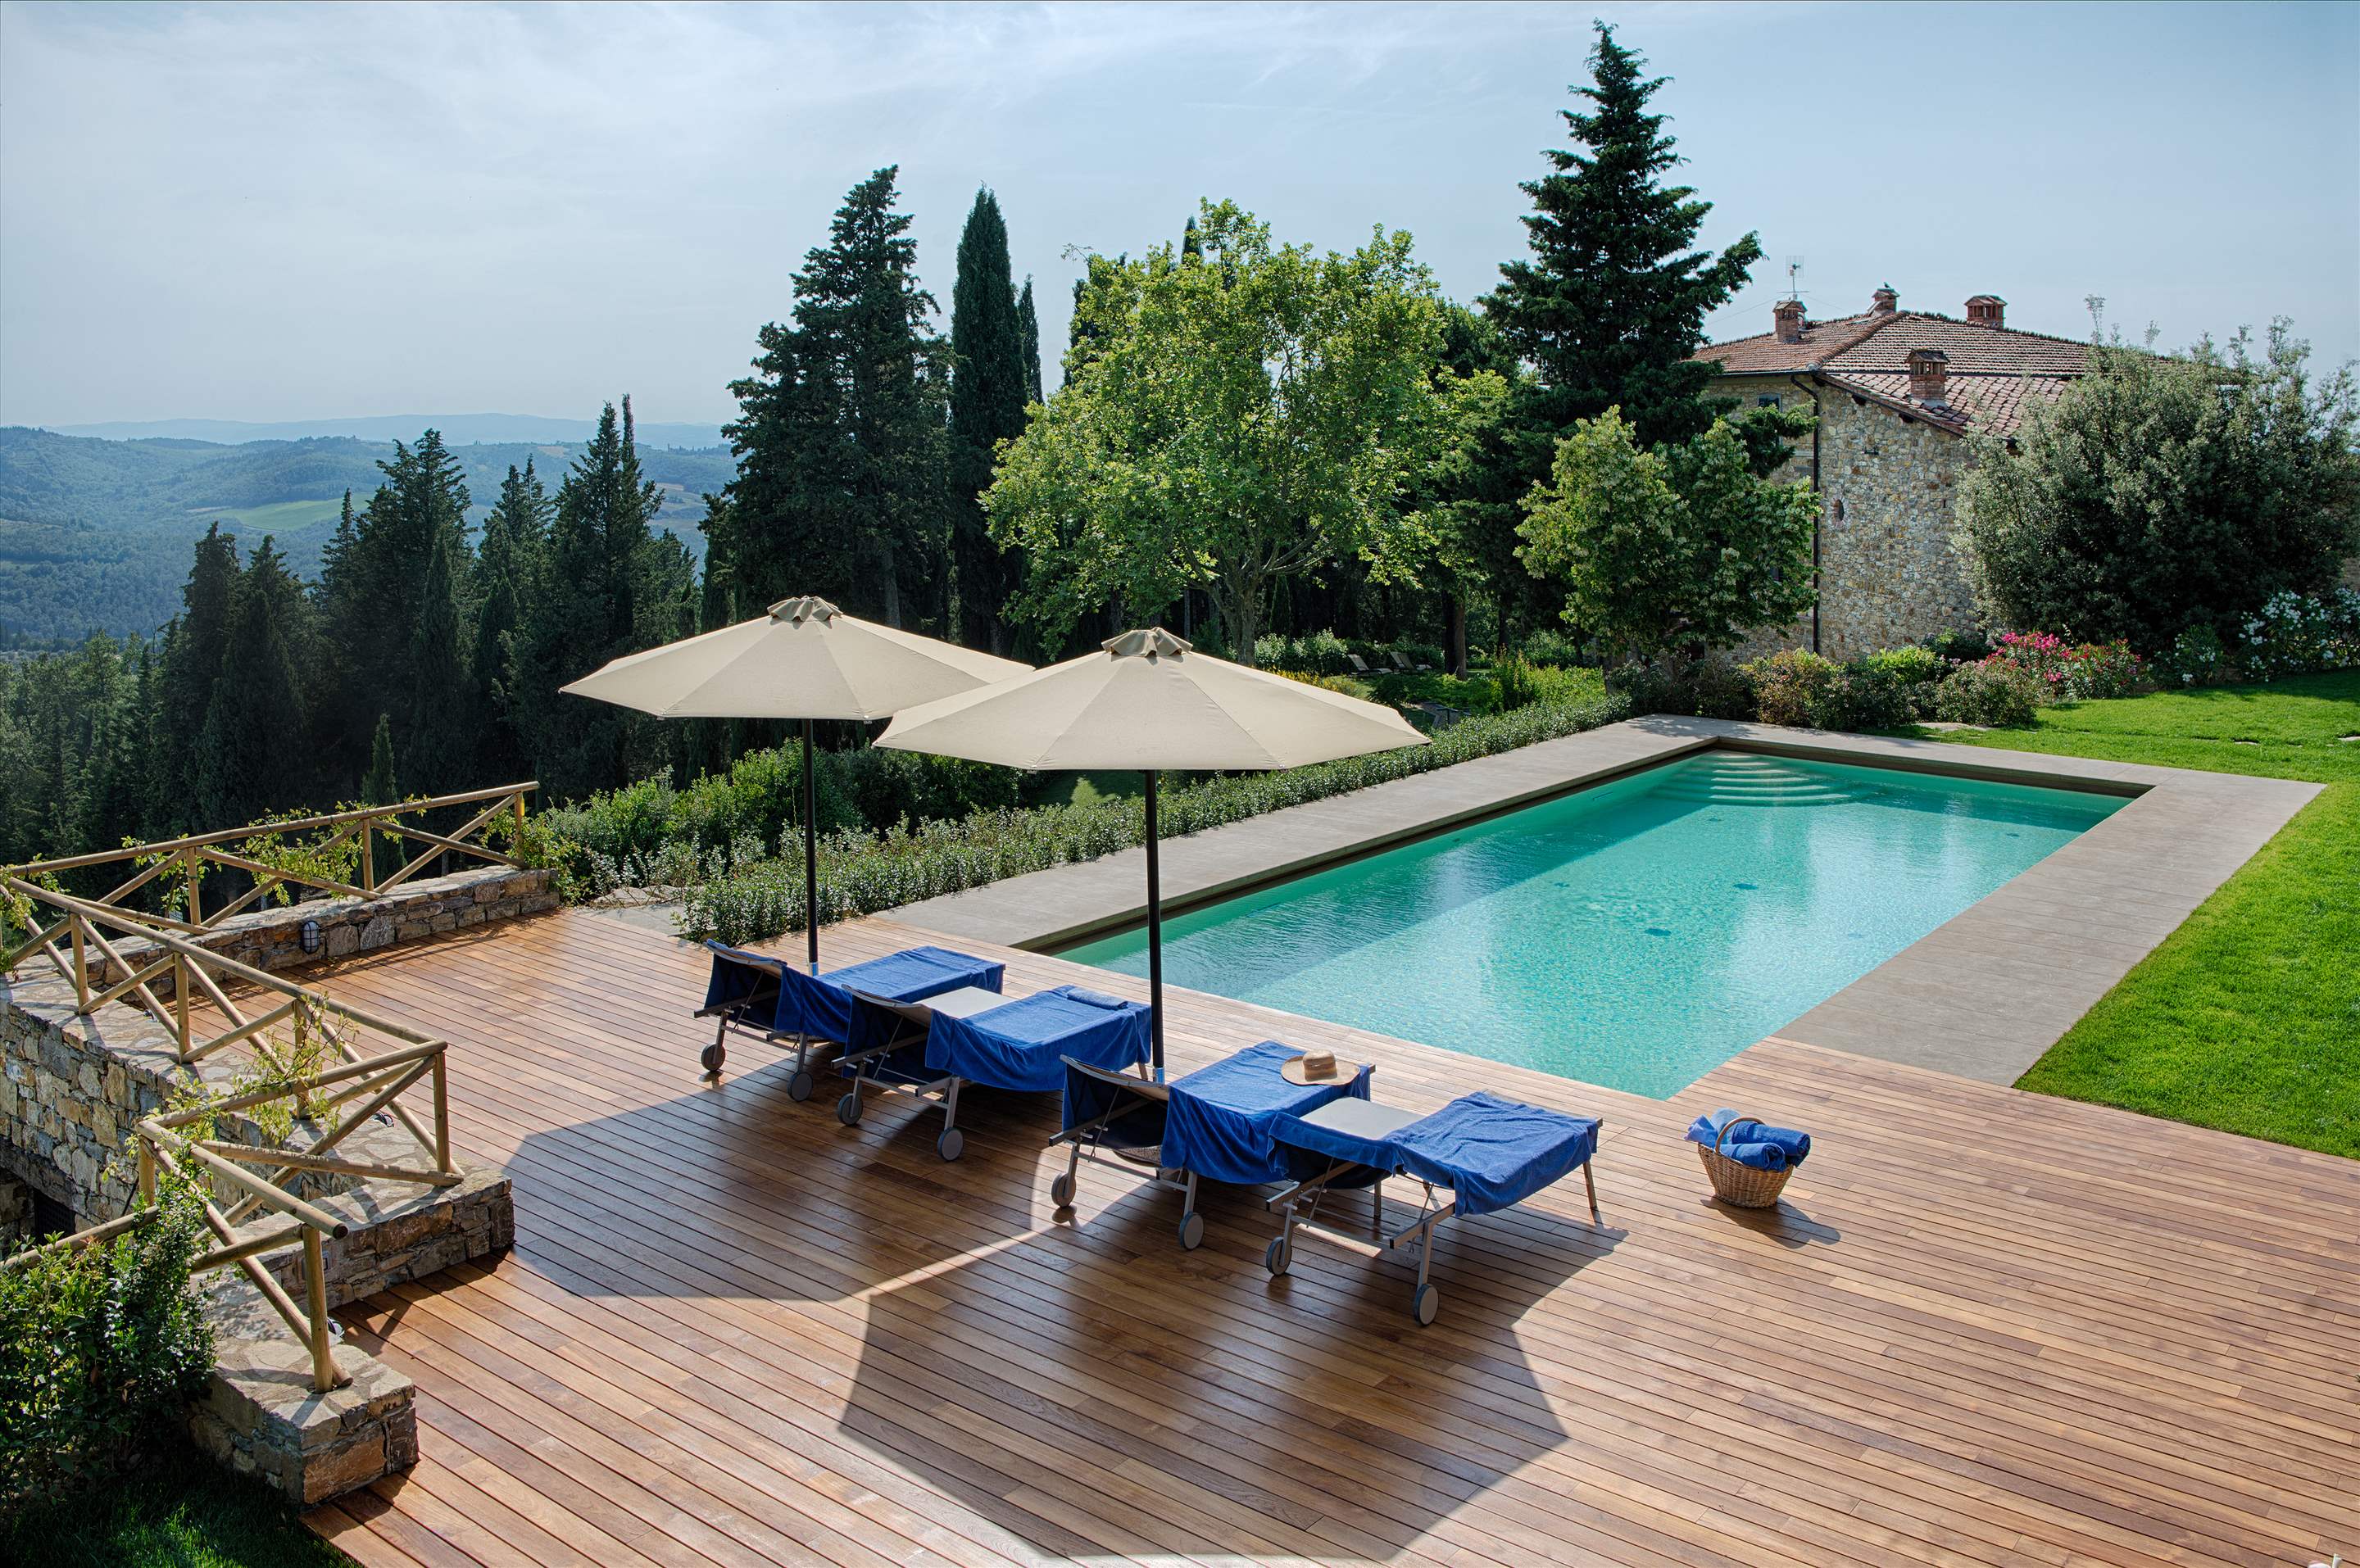 Villa La Valetta, 1 bed Apt Farfalla 2+2, 1 bedroom villa in Chianti & Countryside, Tuscany Photo #1